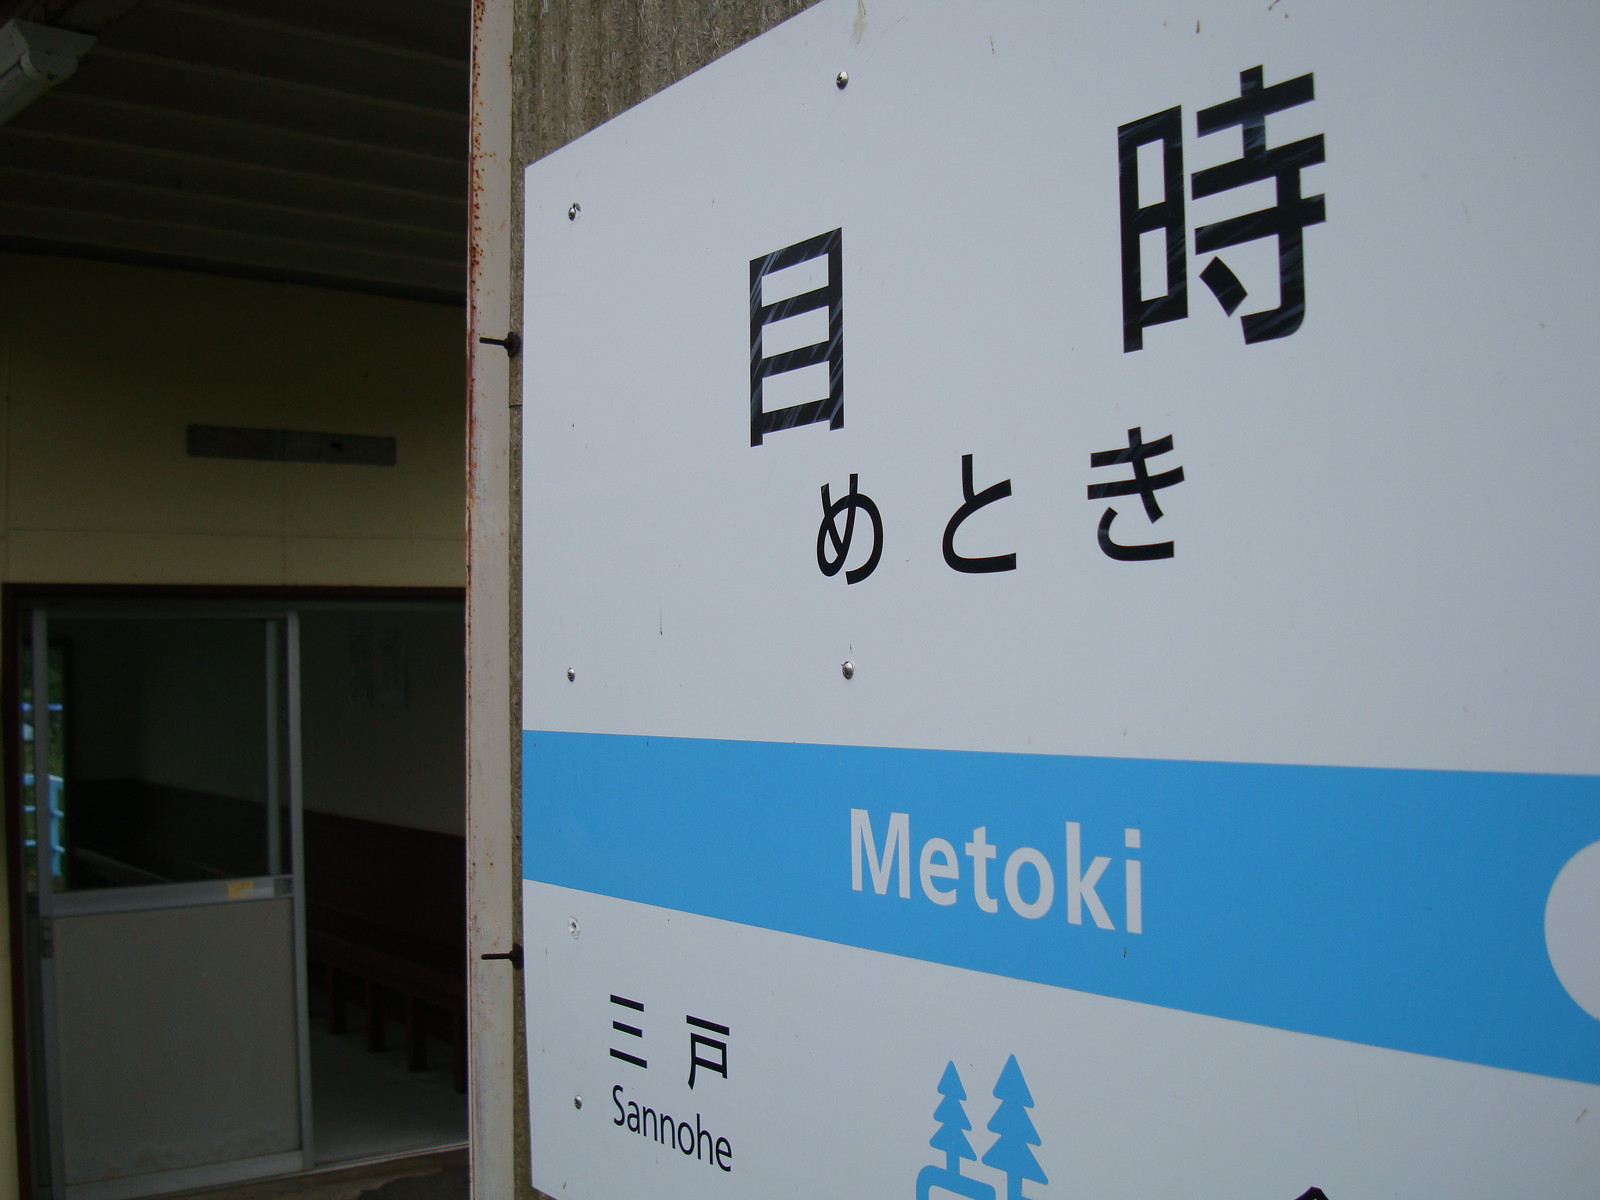 Metoki Station